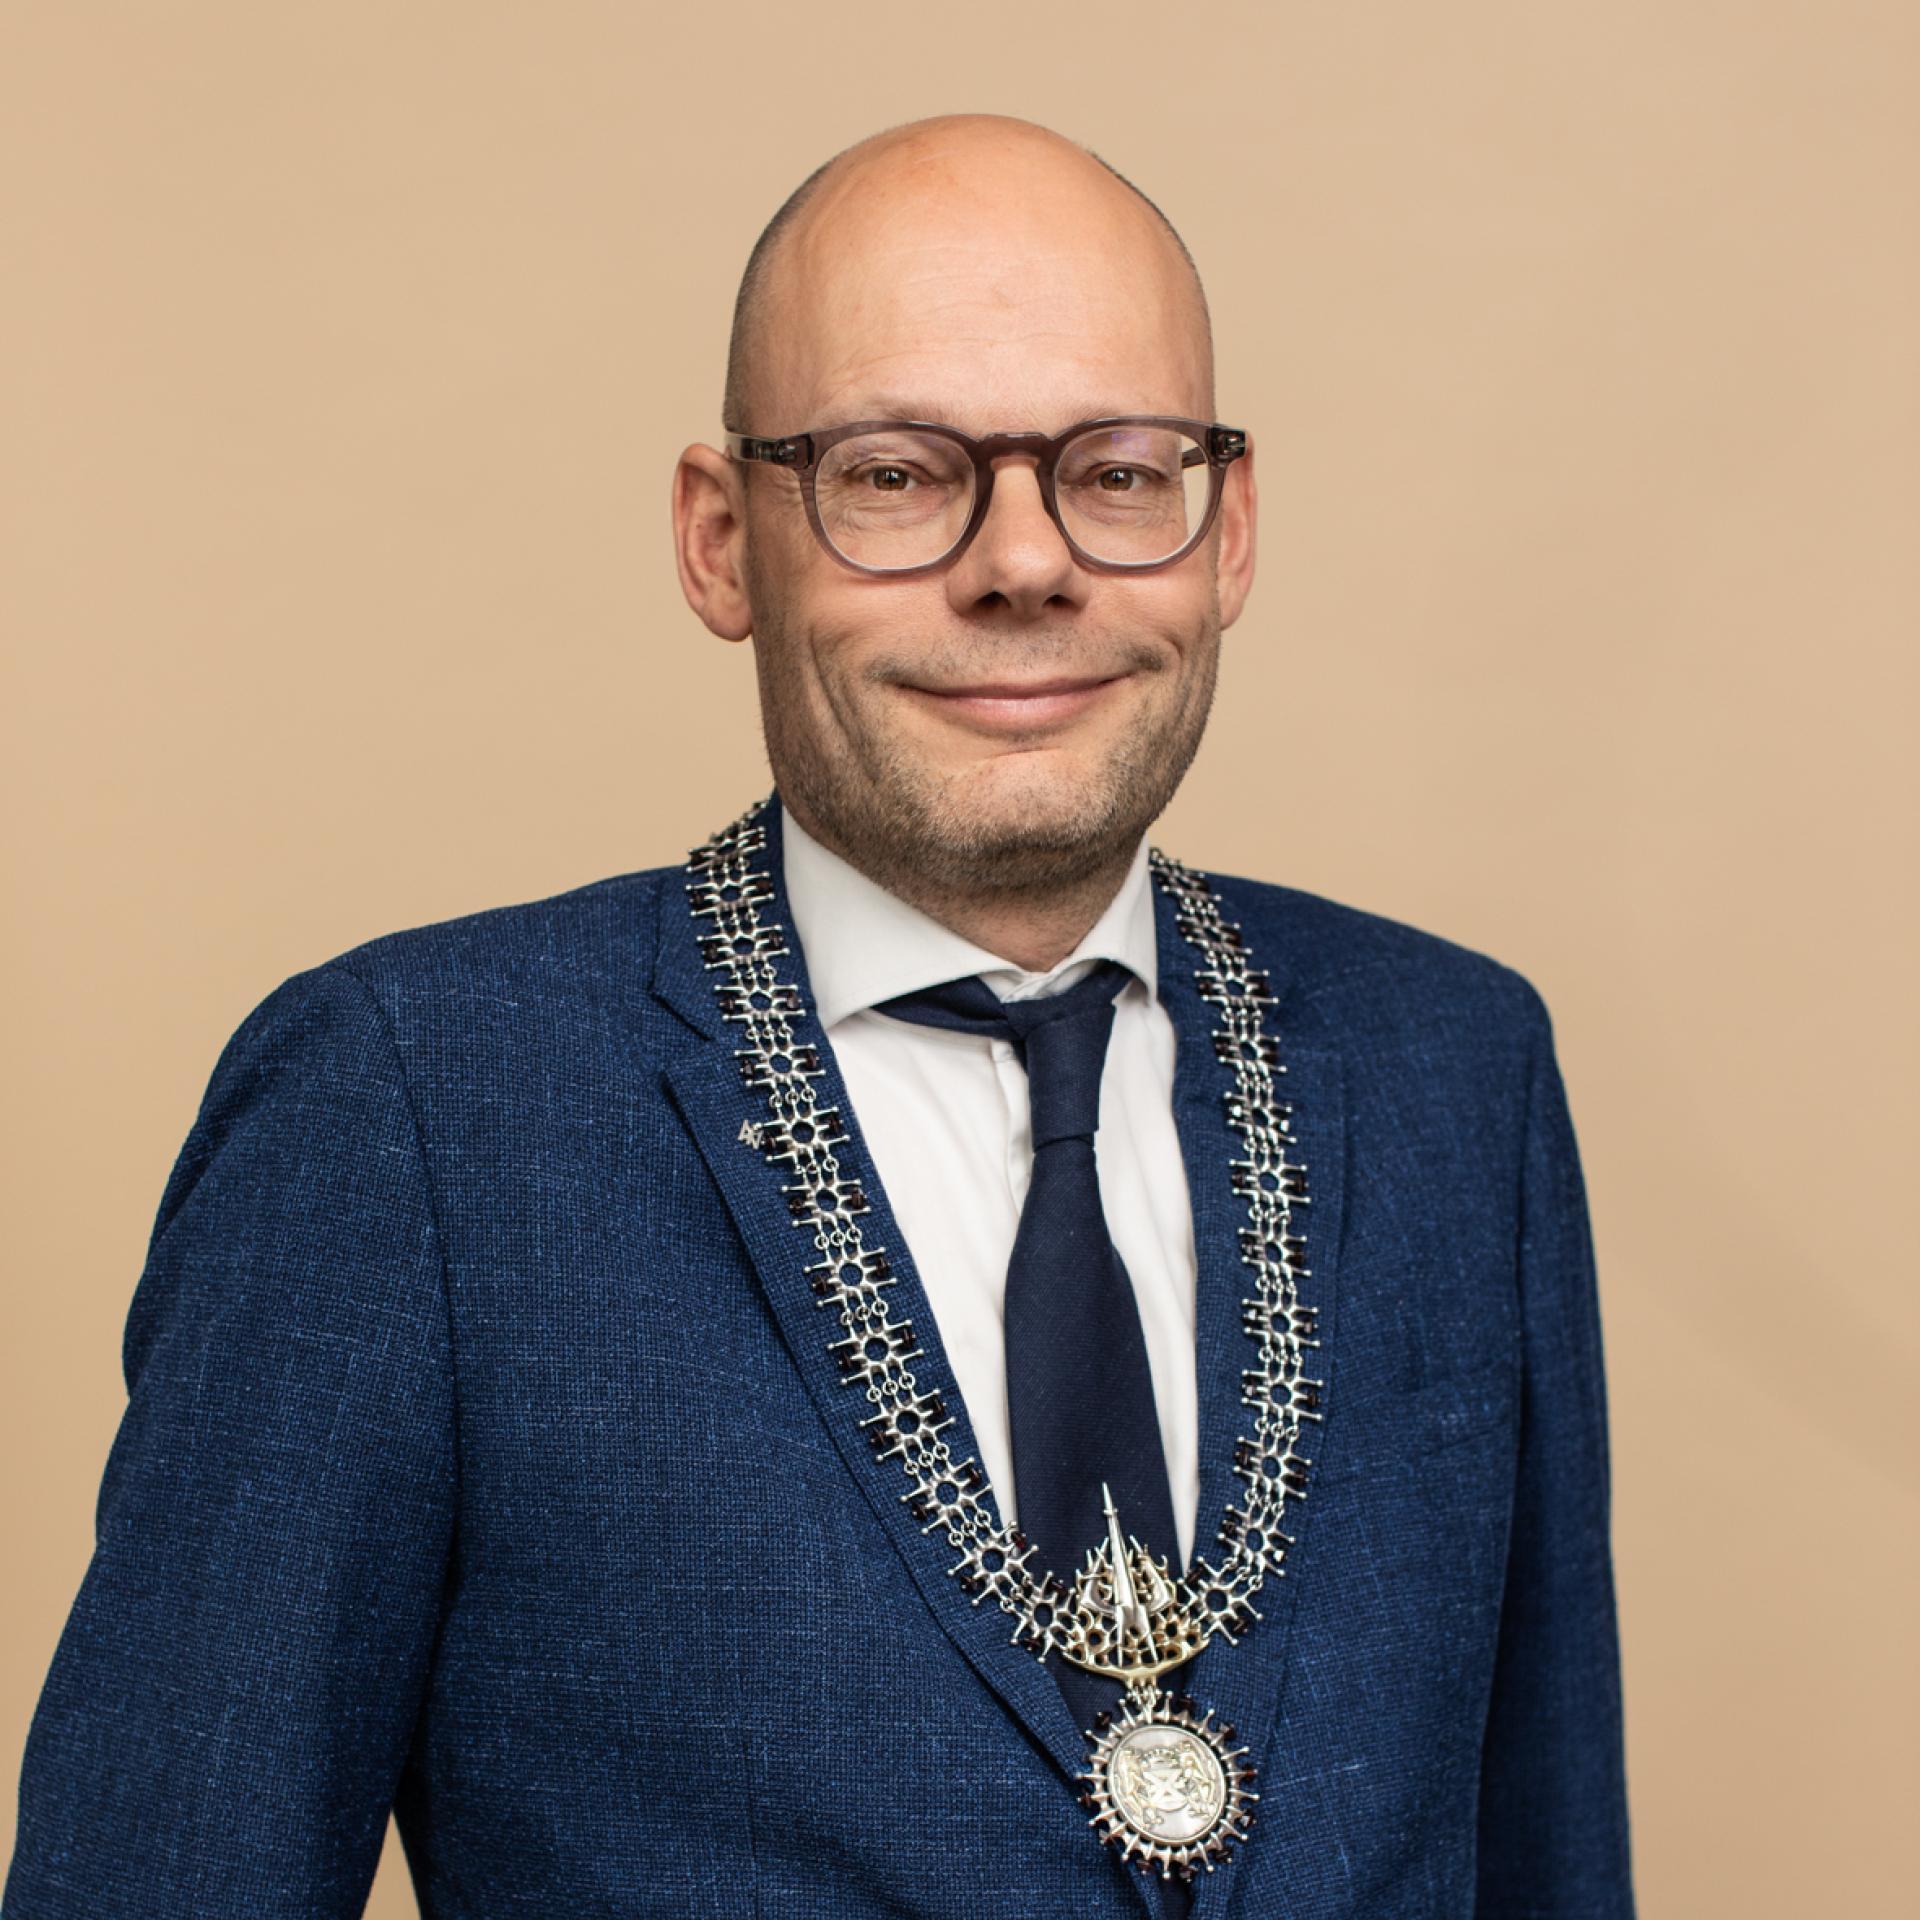 Burgemeester Roelof Bleker